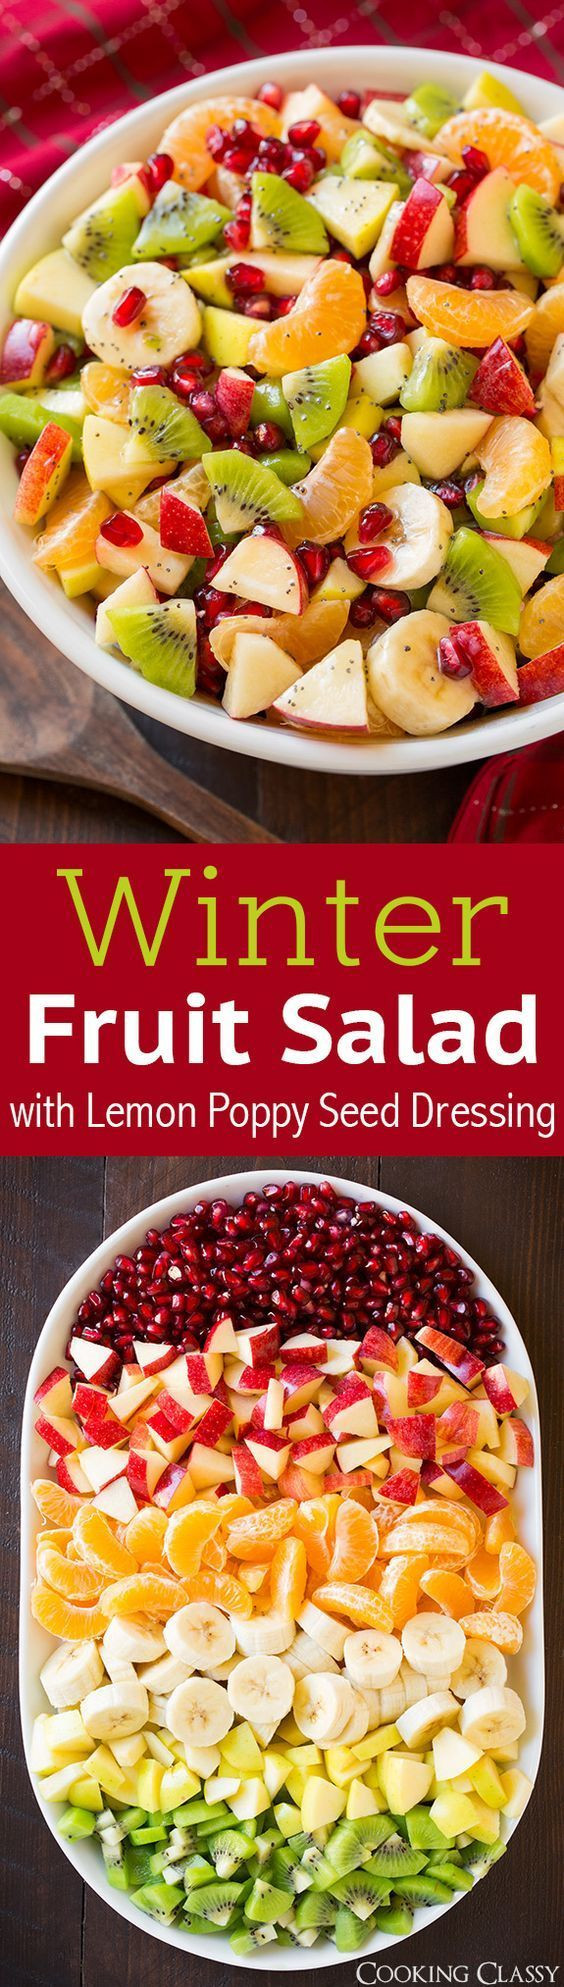 Fruit Salads For Thanksgiving Dinner
 Best 25 Fruit salad ideas on Pinterest